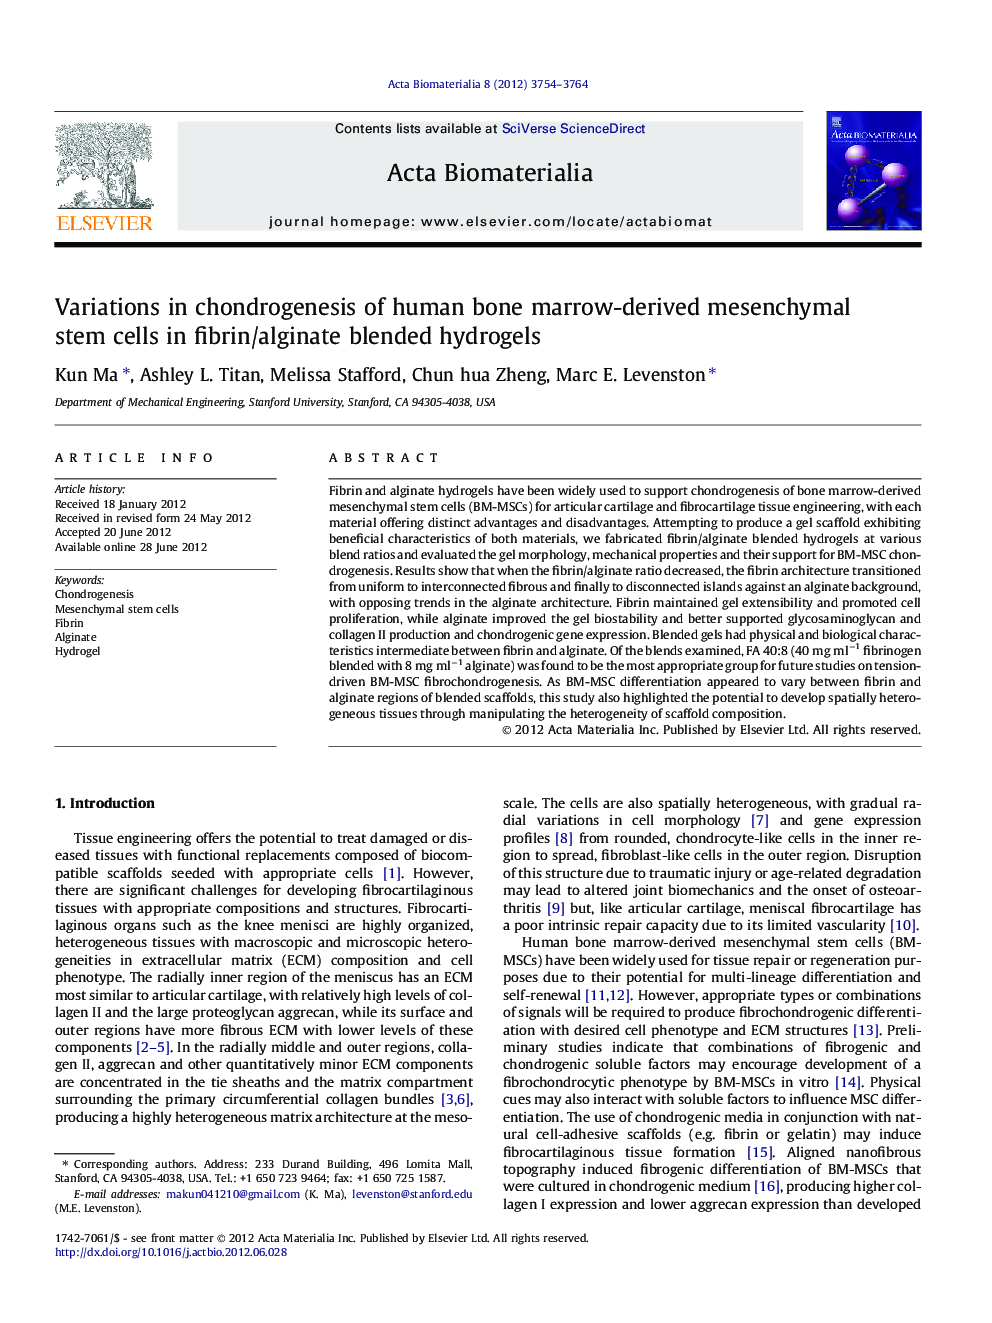 Variations in chondrogenesis of human bone marrow-derived mesenchymal stem cells in fibrin/alginate blended hydrogels